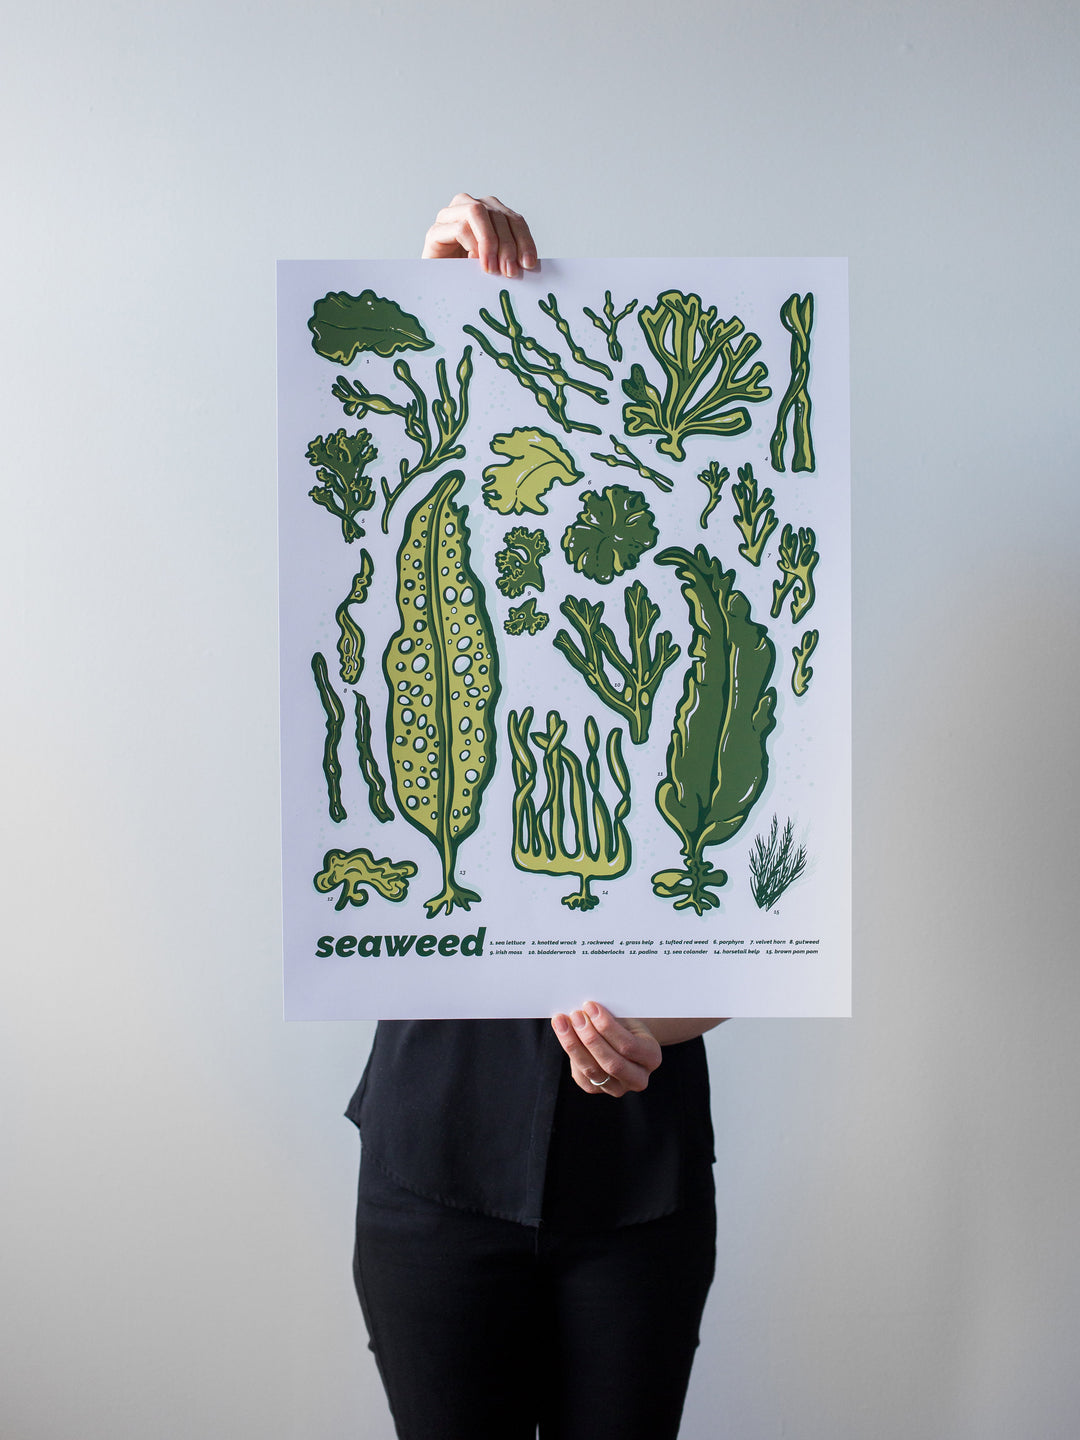 Seaweed Print by Brainstorm - Kelp, Porphyra, Knotted Wrack, Bladderwrack, Irish Moss! 